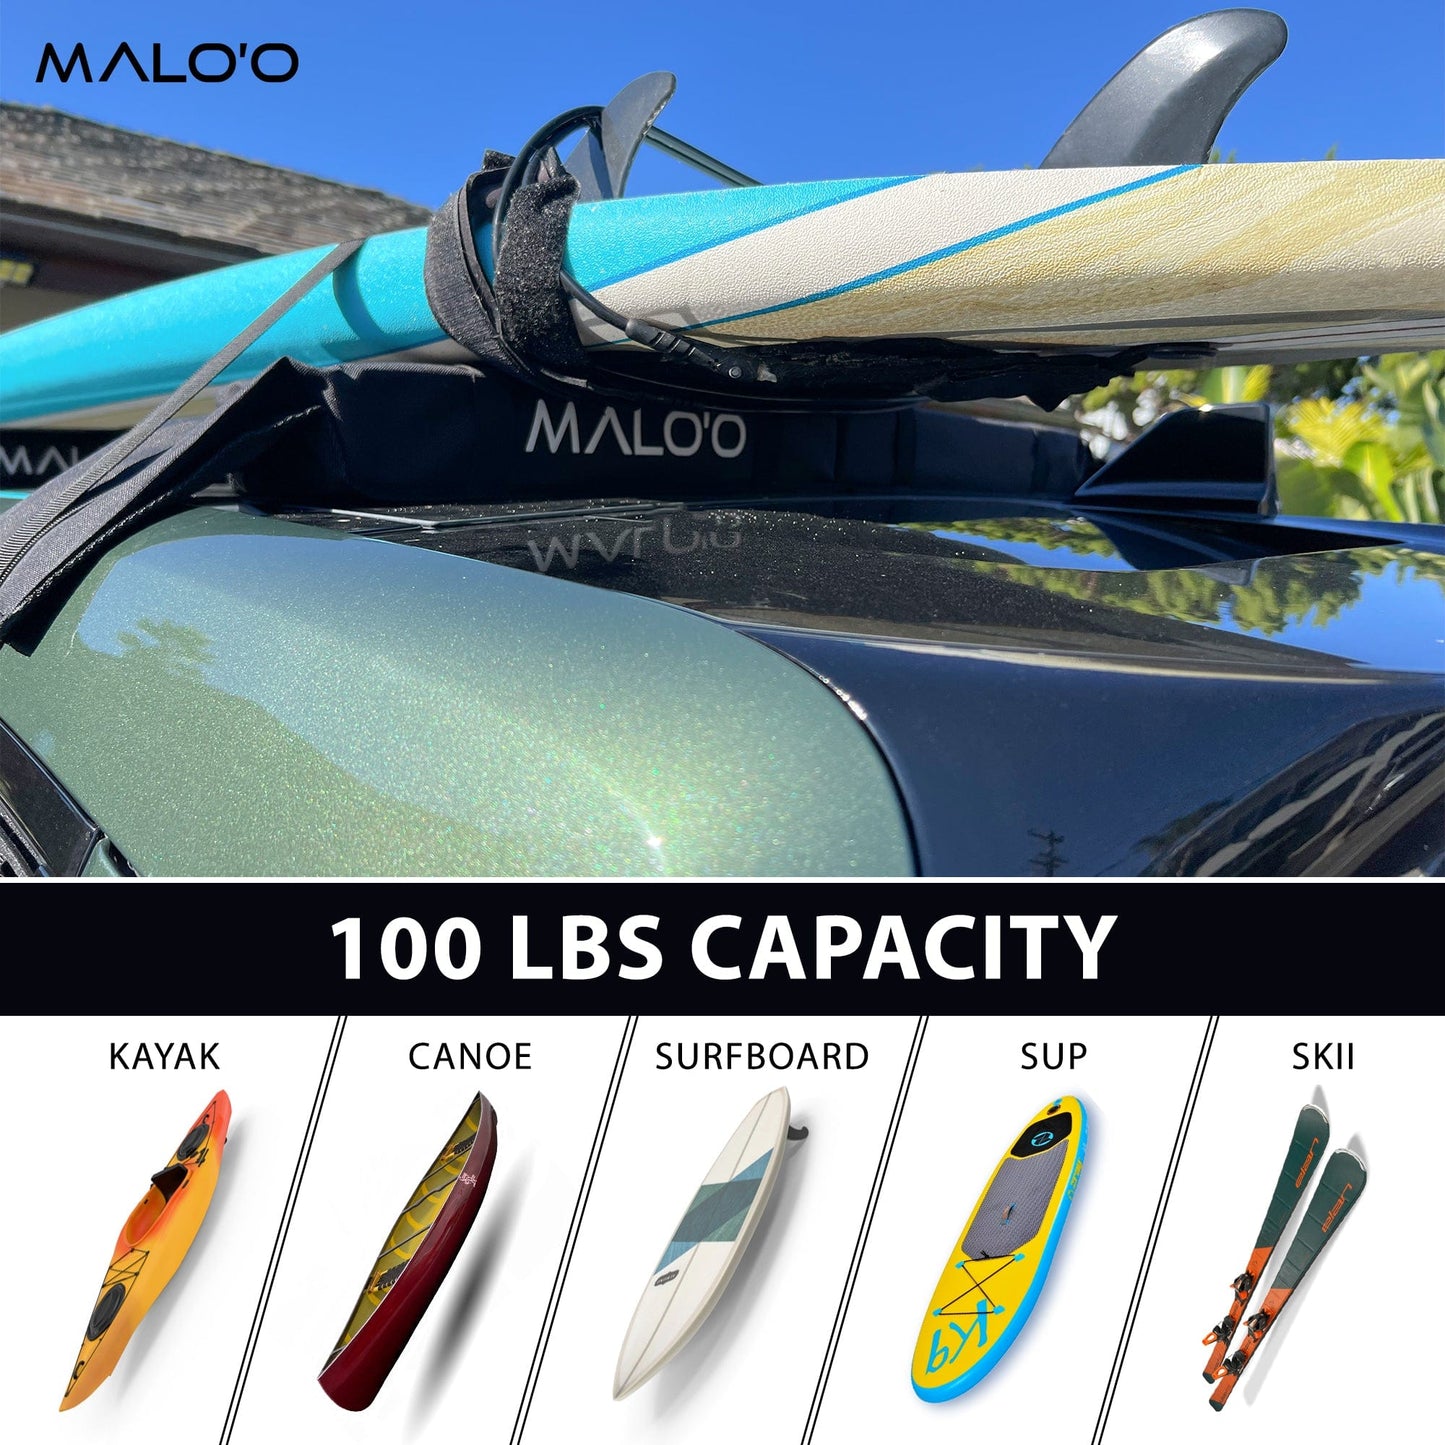 Malo'o Surfboard Roof Rack